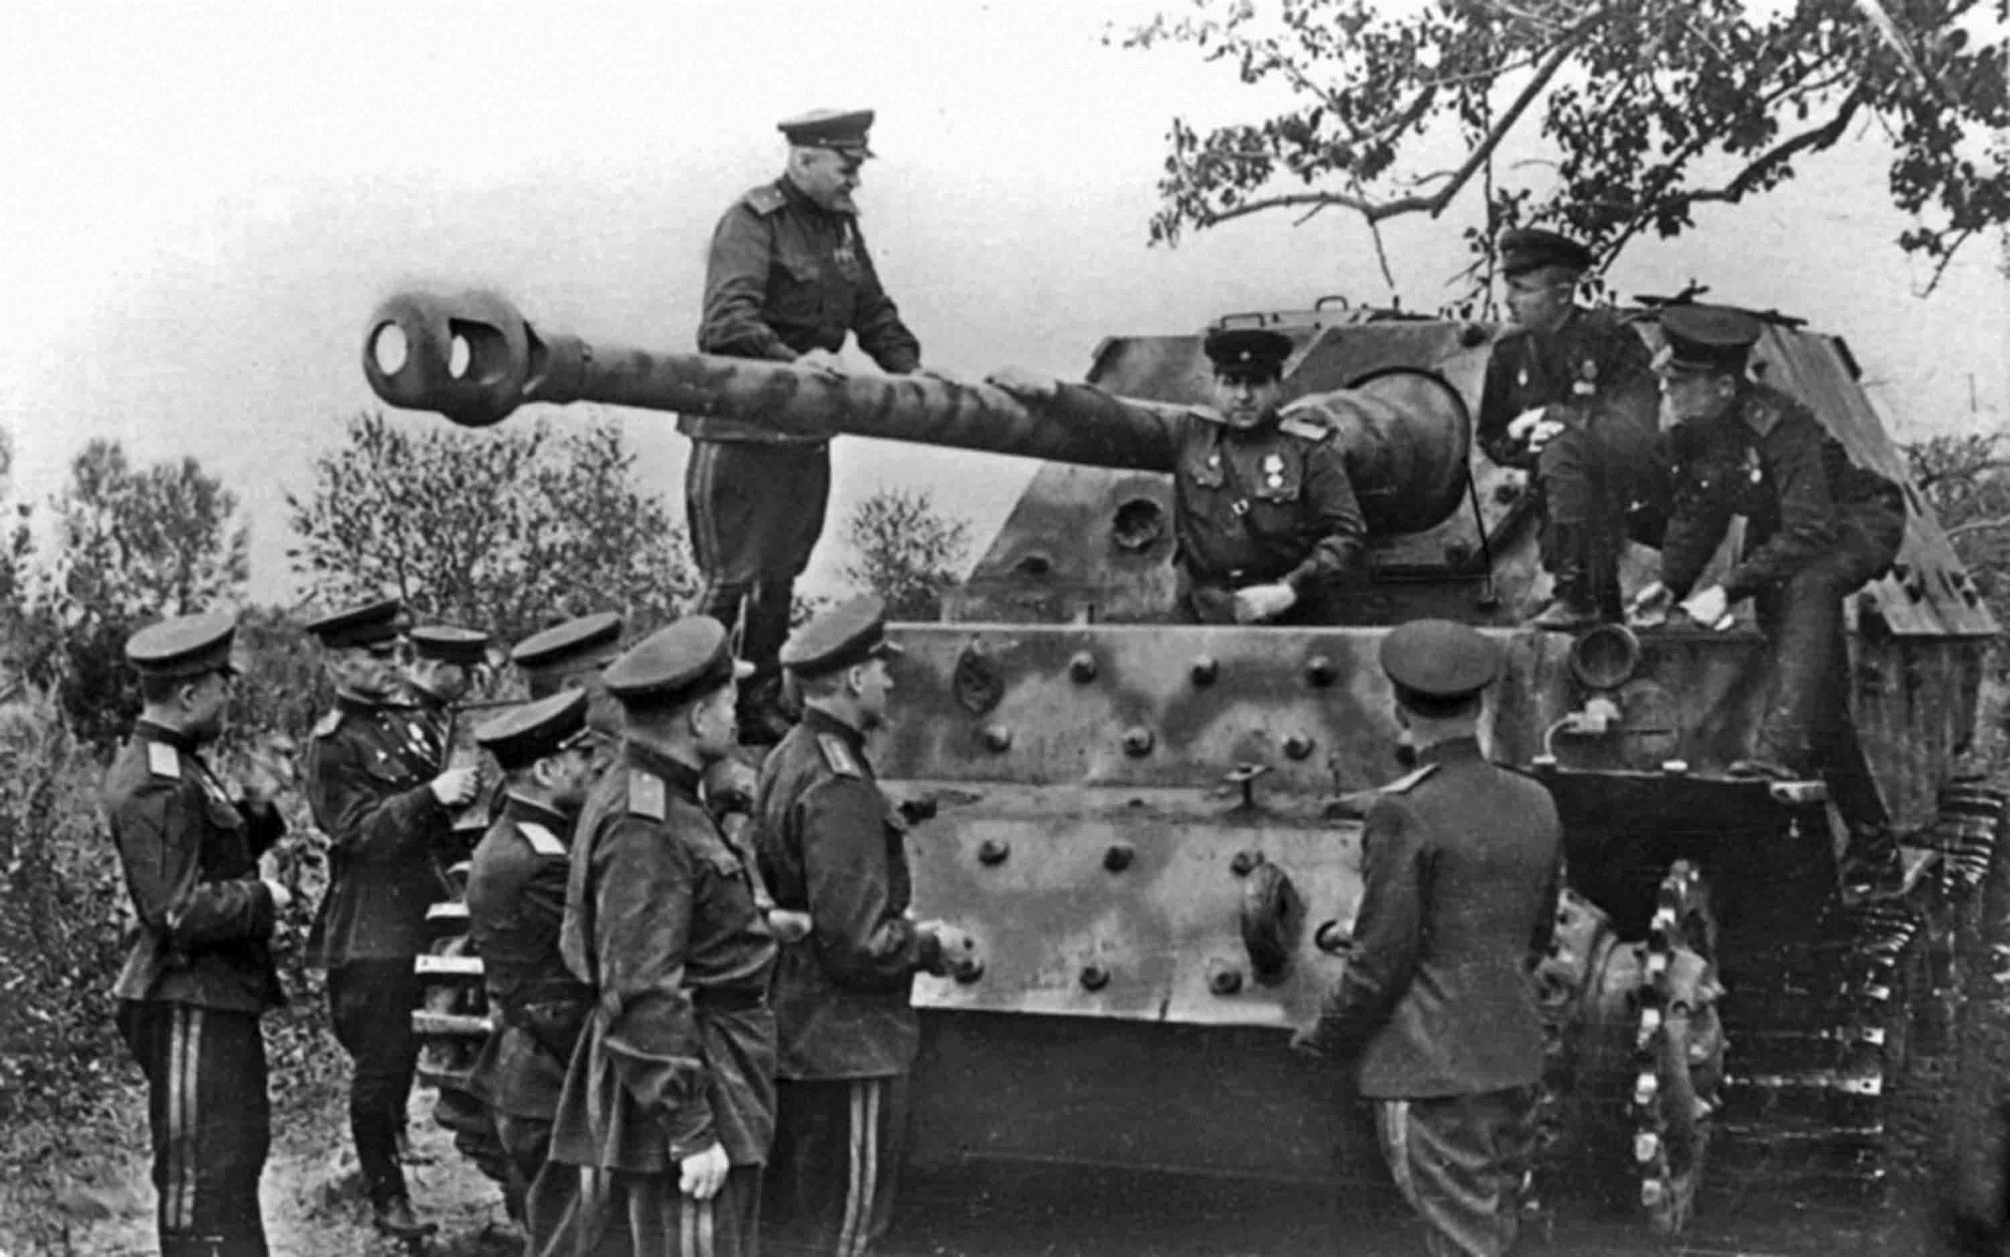 Немецких танков генерал. Битва Багратион 1944. Операция Багратион фото 1944. Белорусская операция 1944.